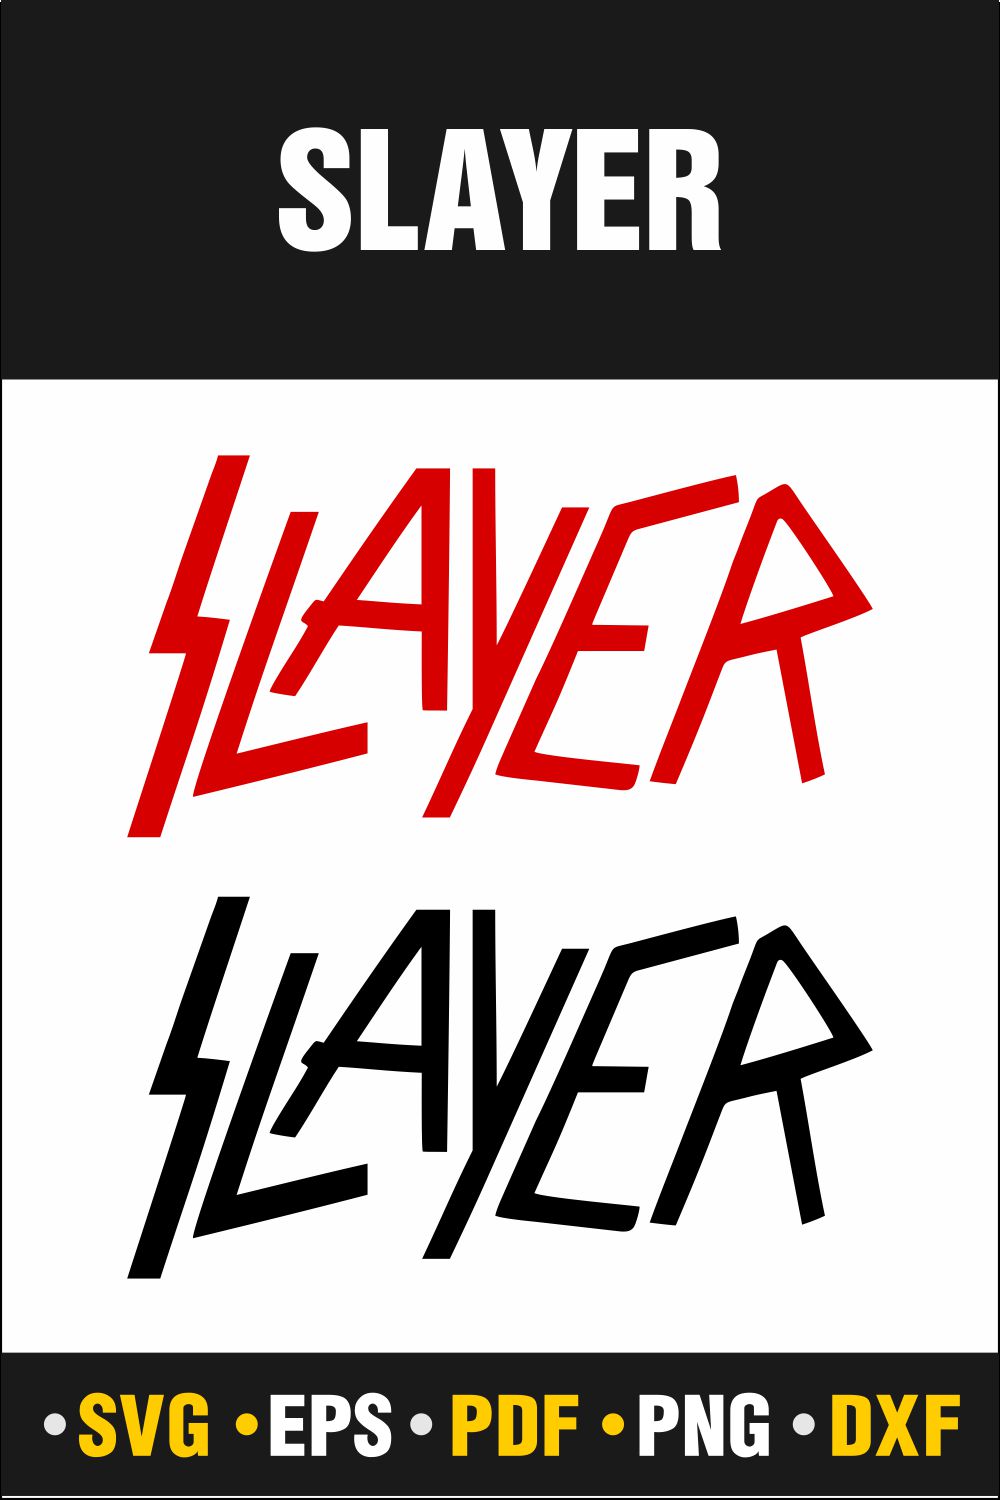 Slayer Svg, Slayer, Slayer Music Svg, Slayer Png, Slayer Monogram Png, Rapper Svg, Instant Download Vector Cut file Cricut, Silhouette, Pdf Png, Dxf, Decal pinterest preview image.